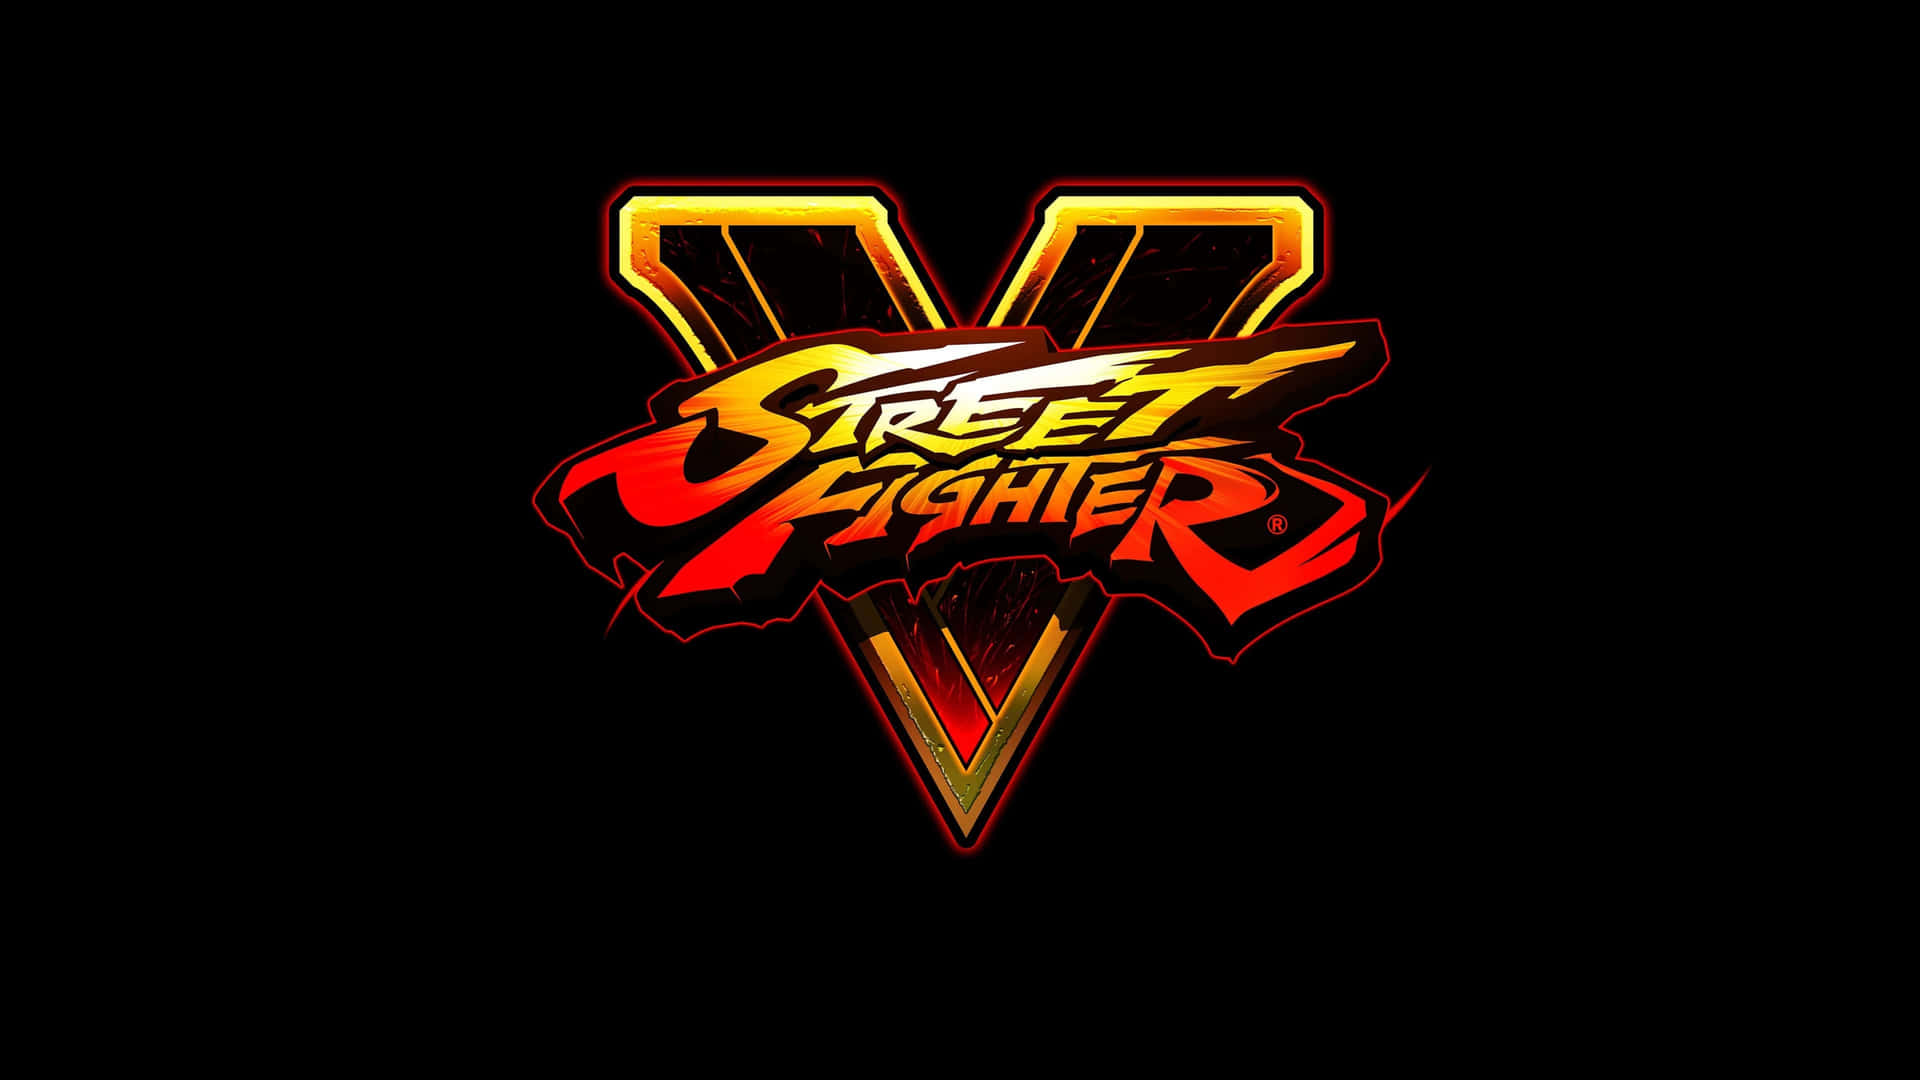 Street Fighter 4000 X 2250 Wallpaper